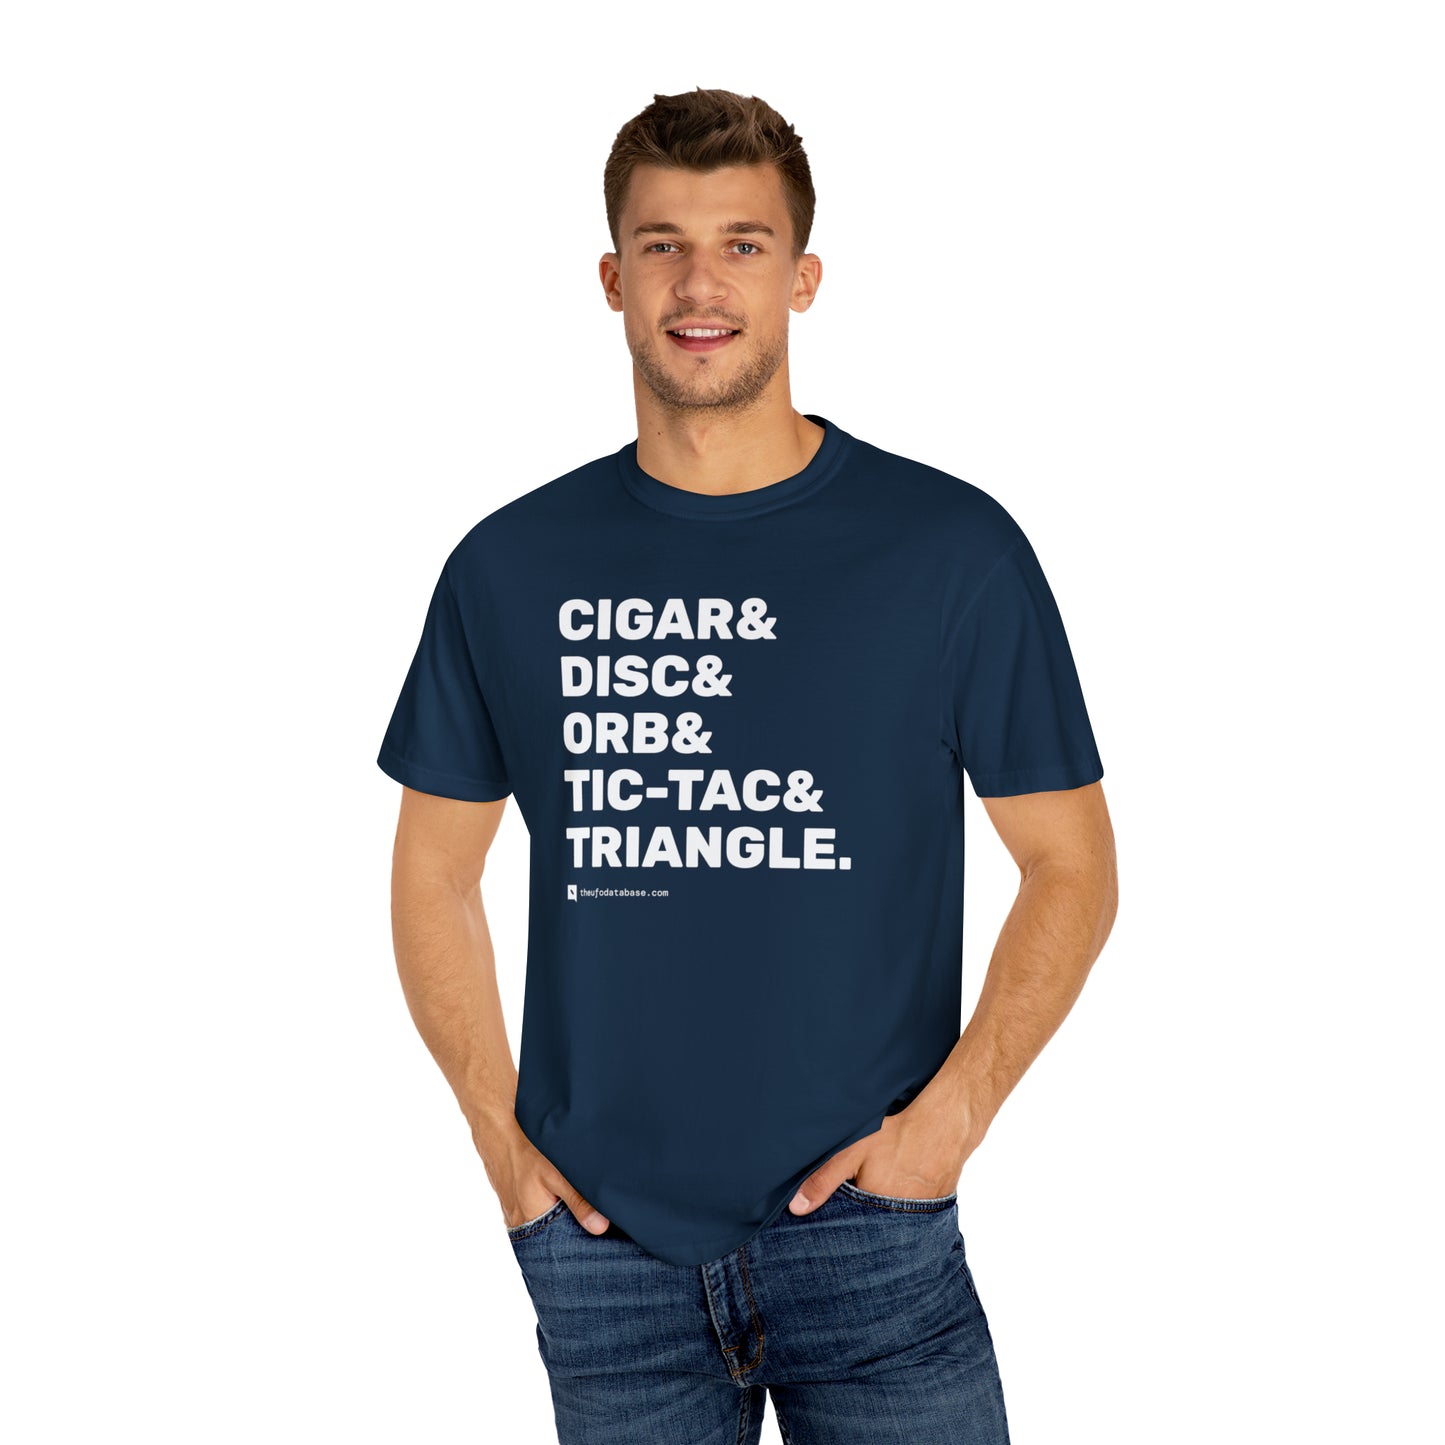 Disc& Orb& Tic-Tac& Triangle T-Shirt